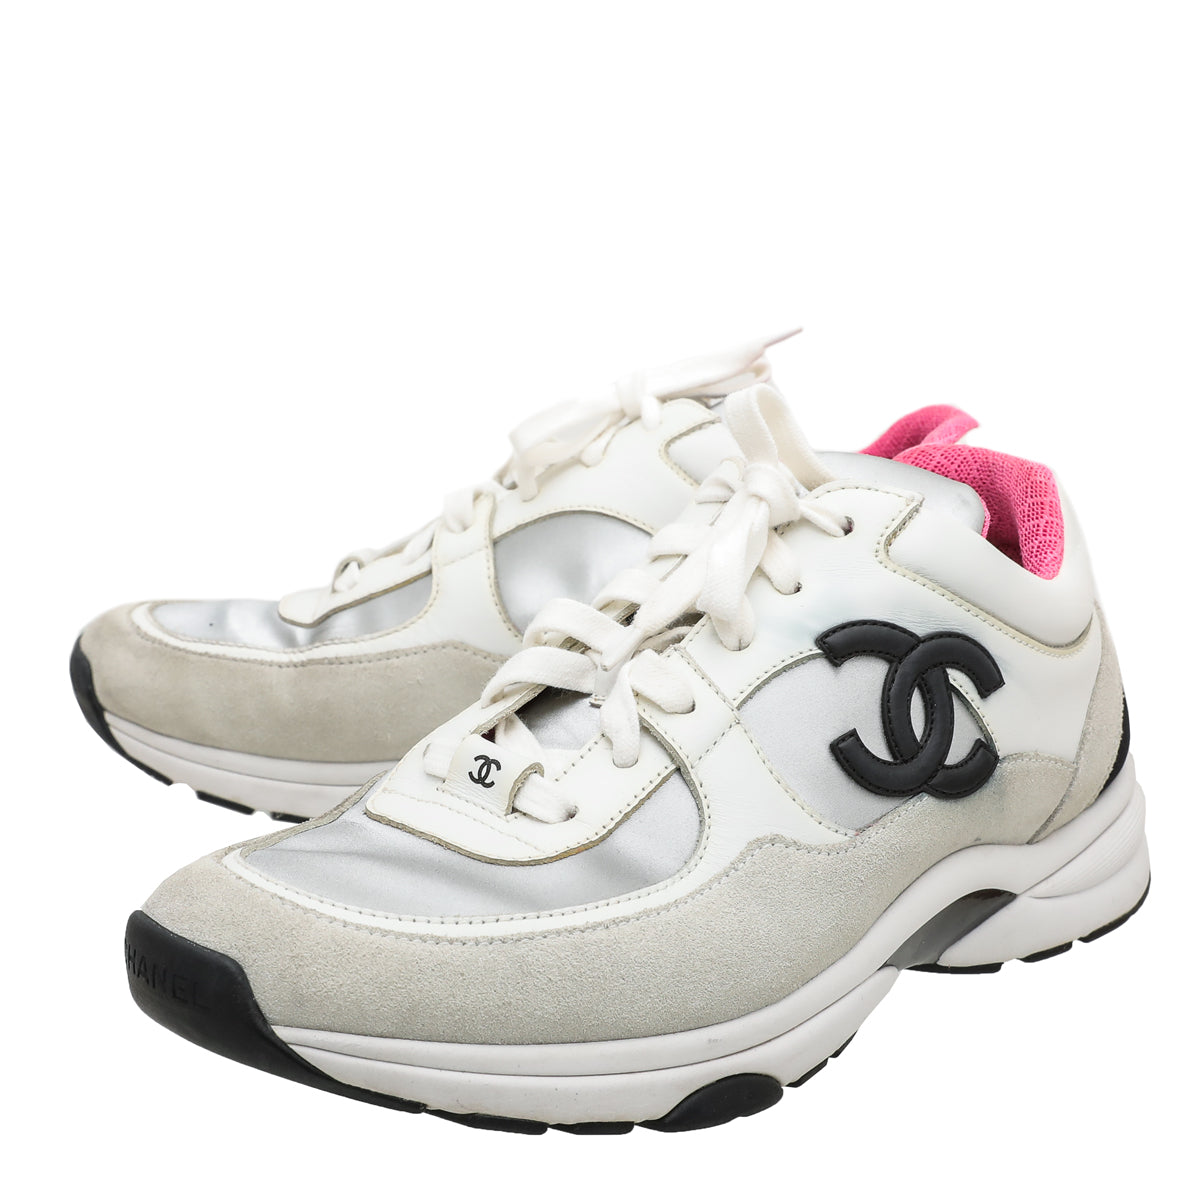 Chanel Multicolor Sneakers Trainers Interlocking CC logo, sz39